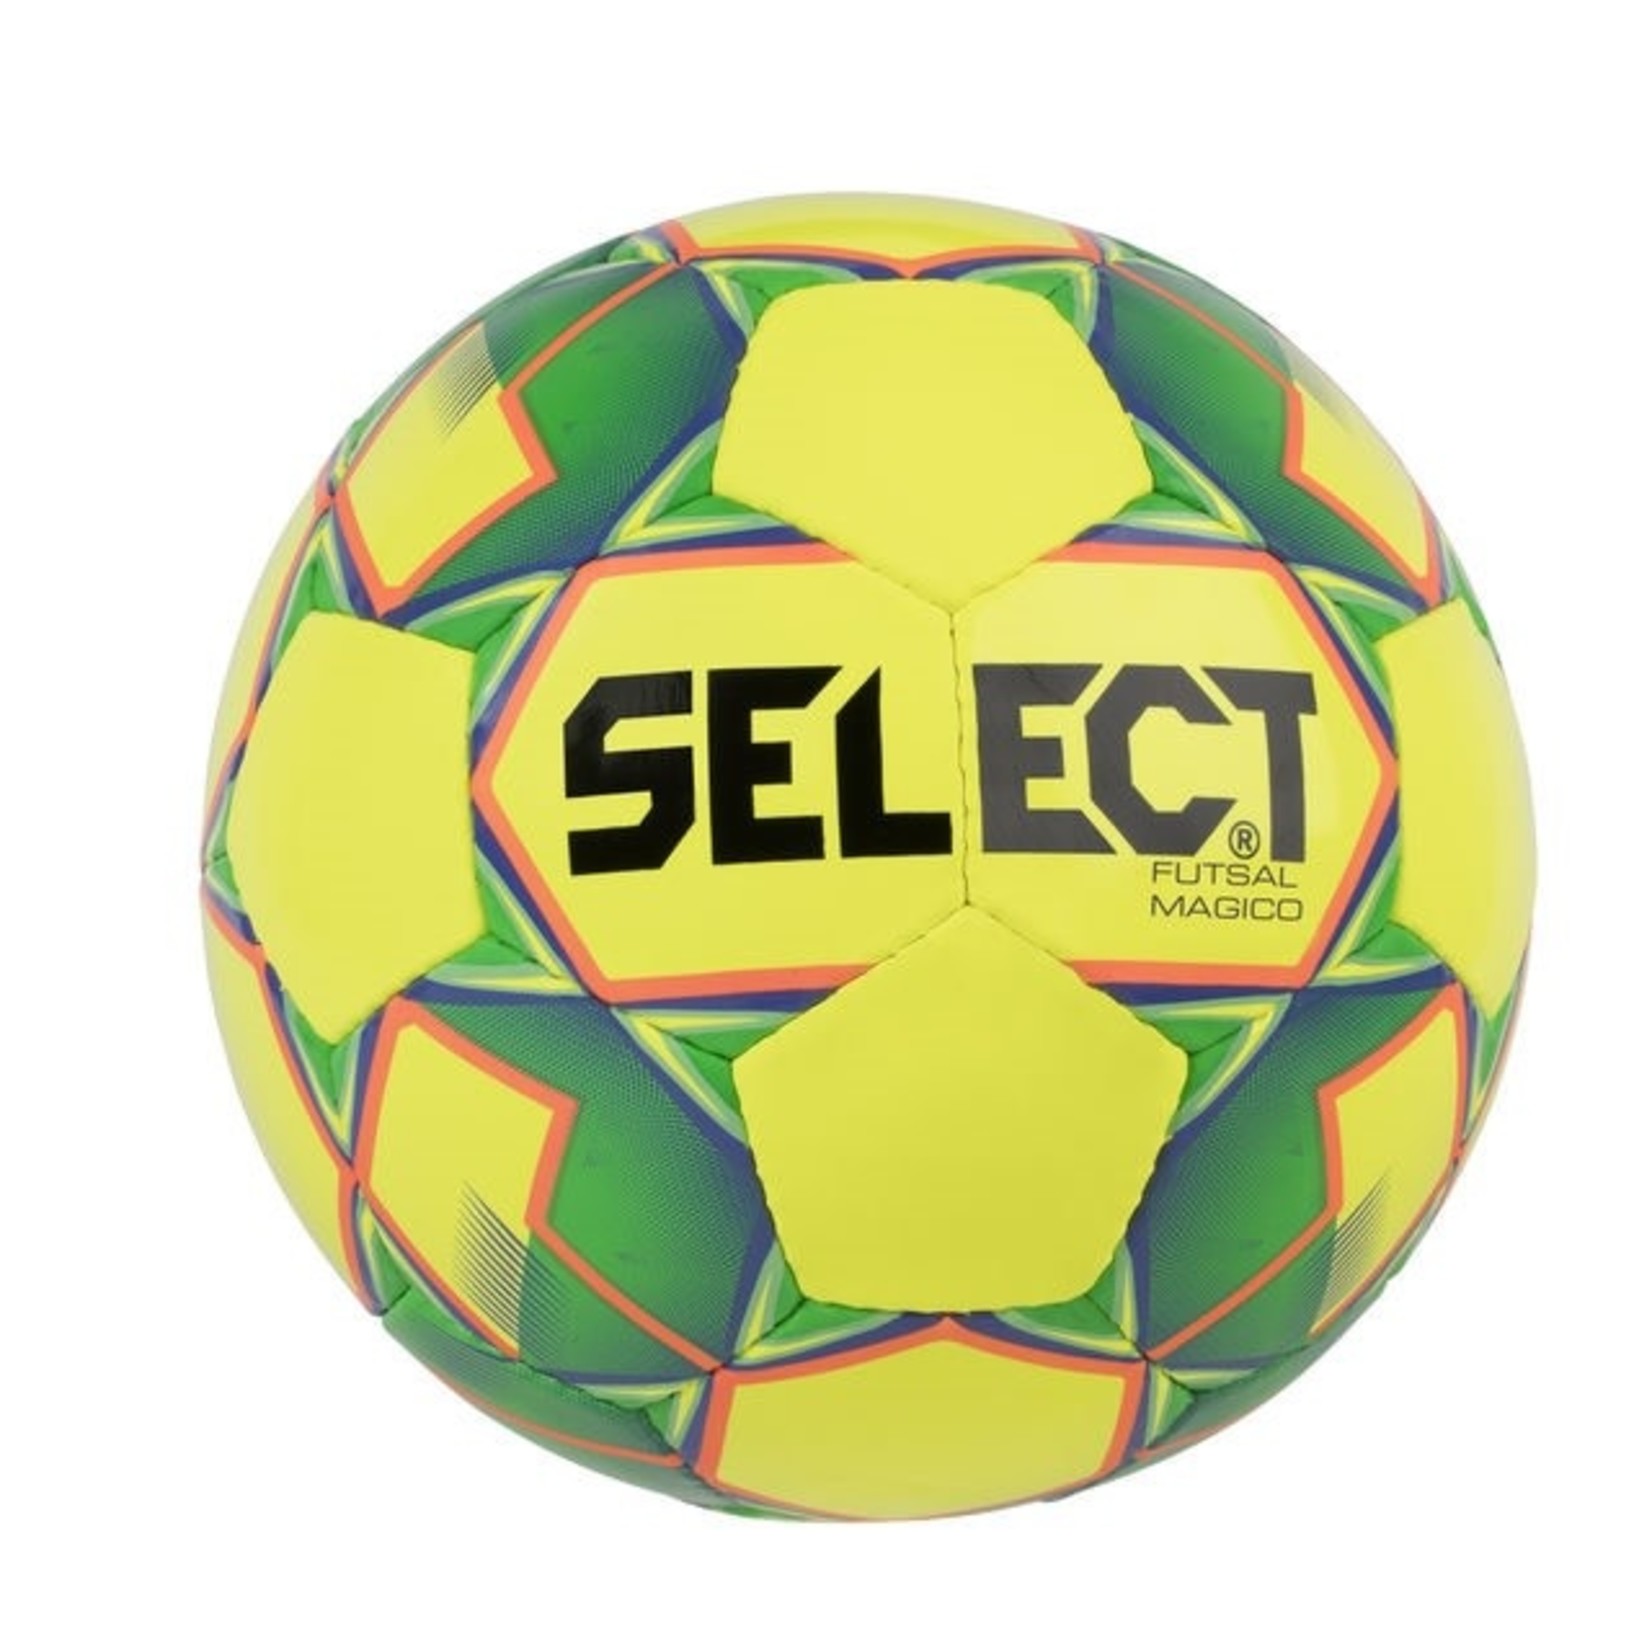 SELECT MAGICO FUTSAL BALL (YELLOW/GREEN)